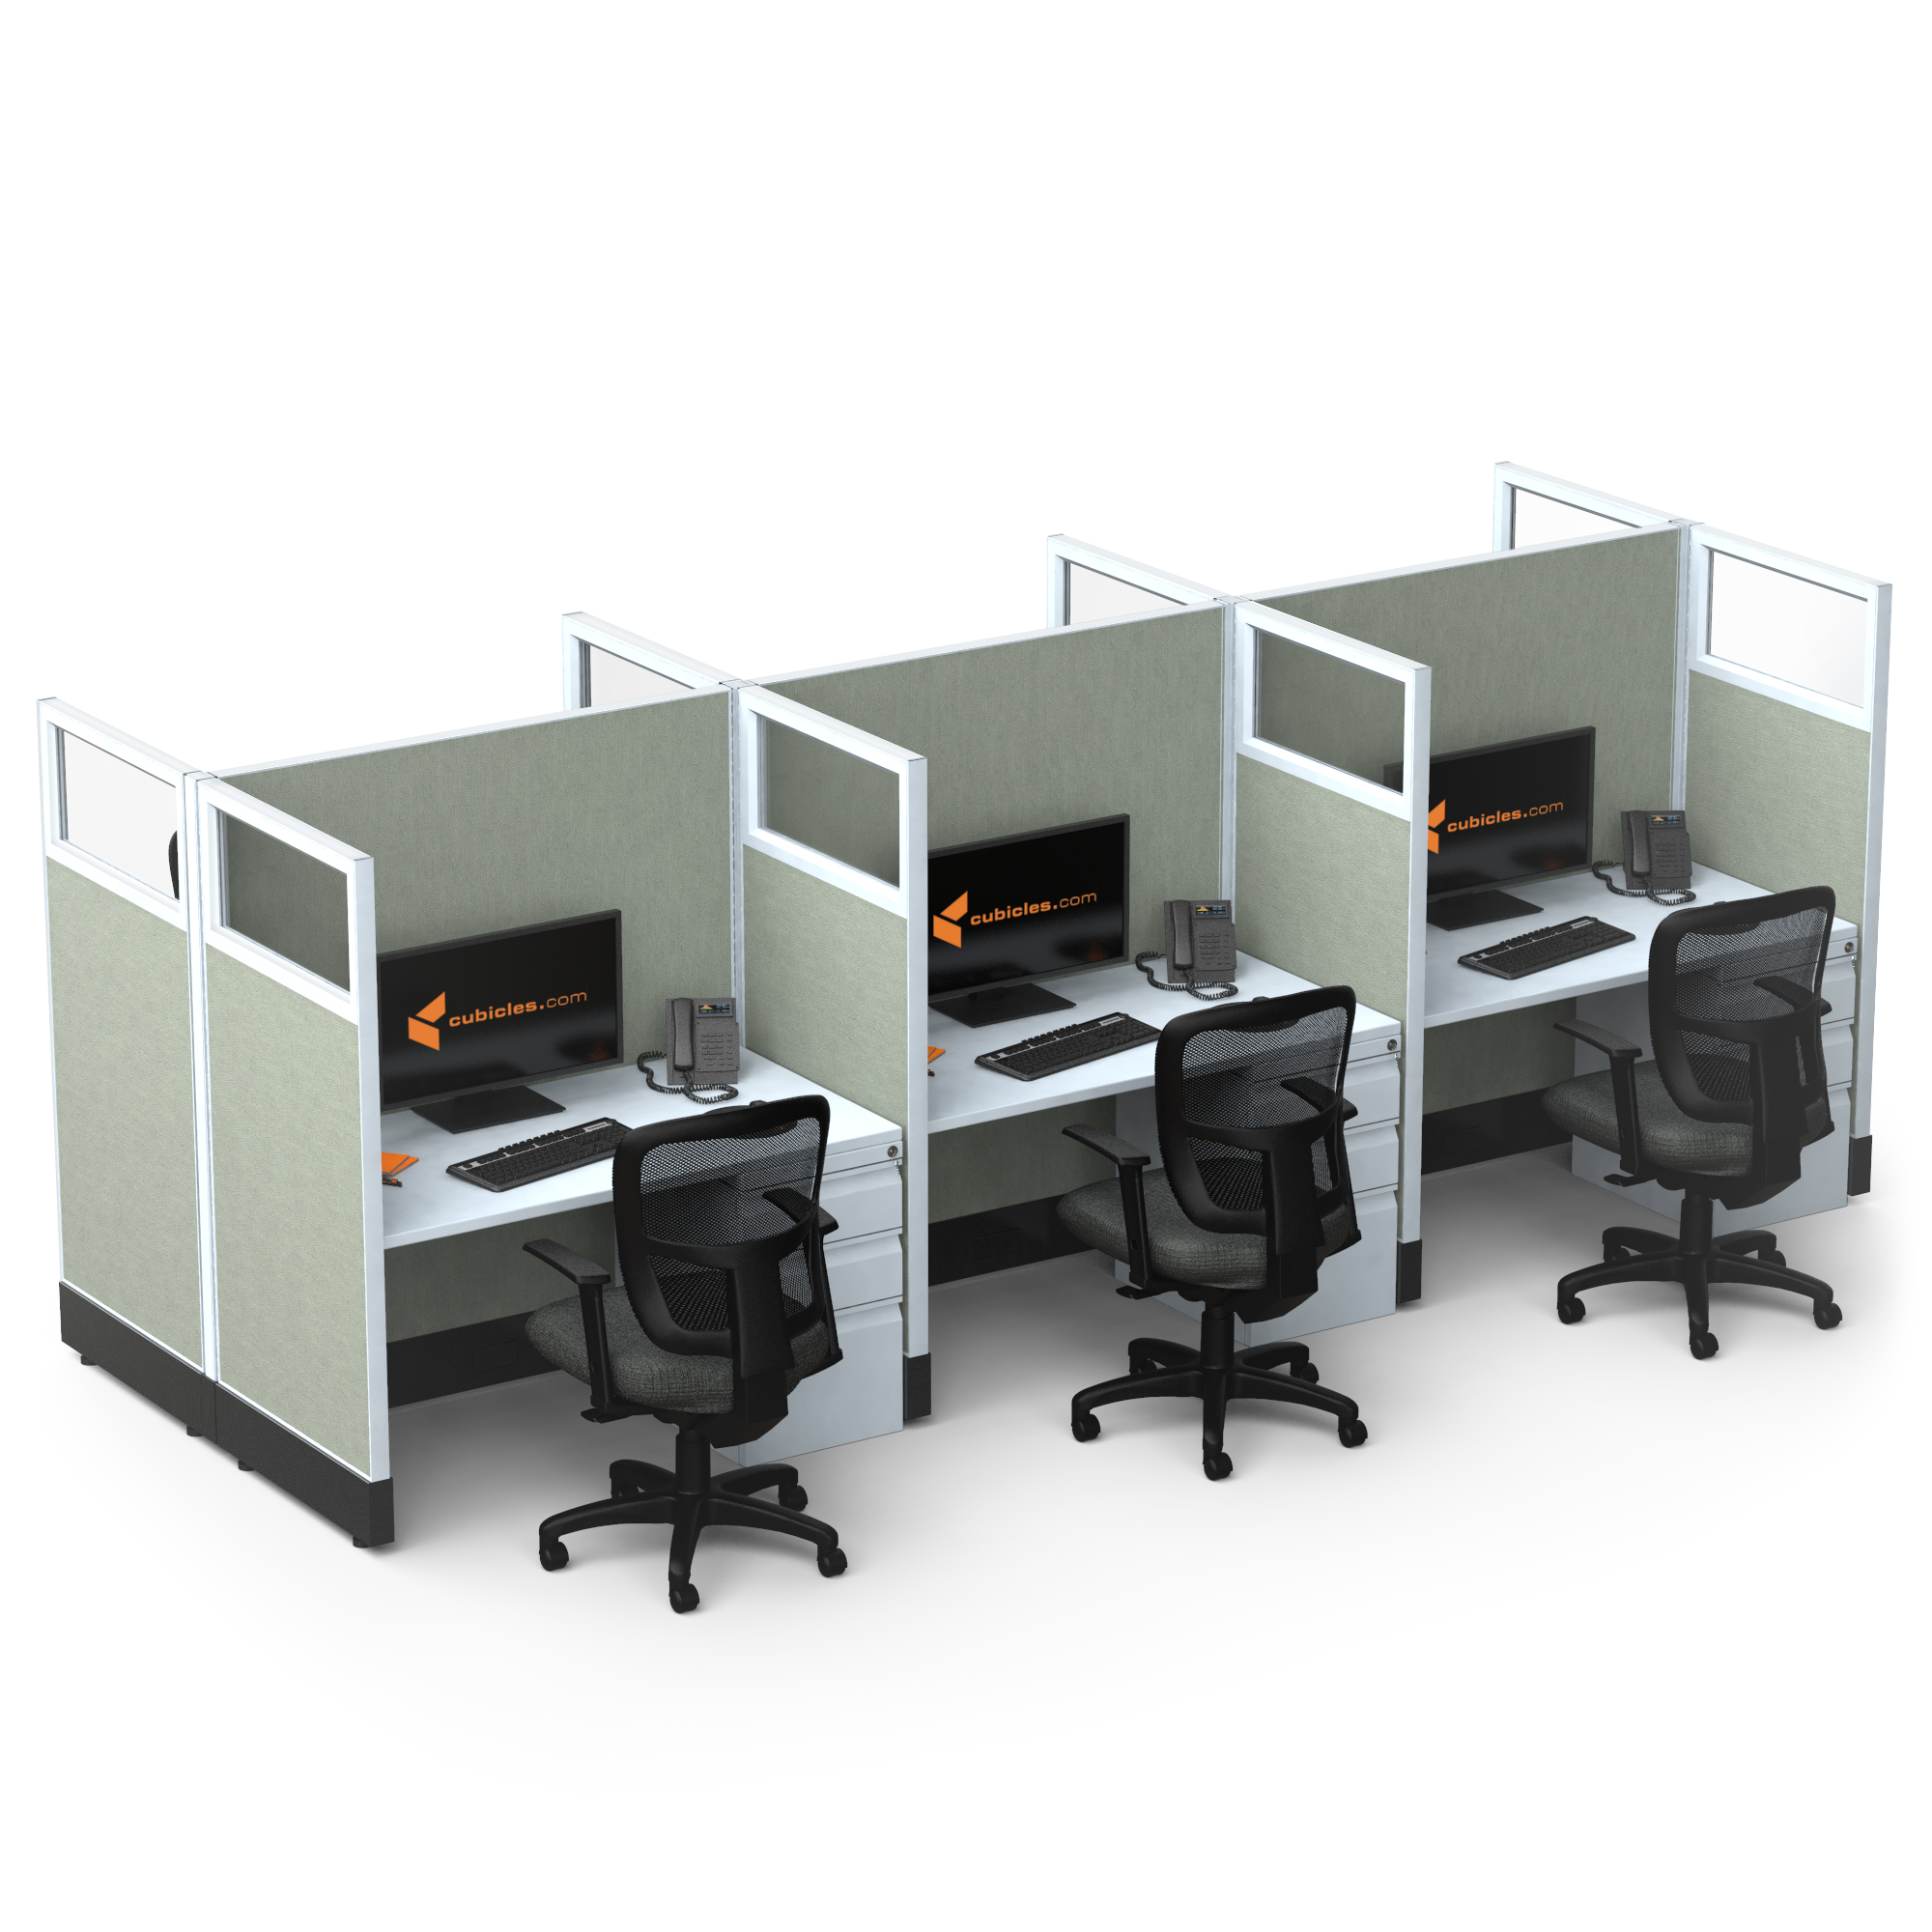 hot-desking-cubicle-workstations-6c-pack-powered.jpg